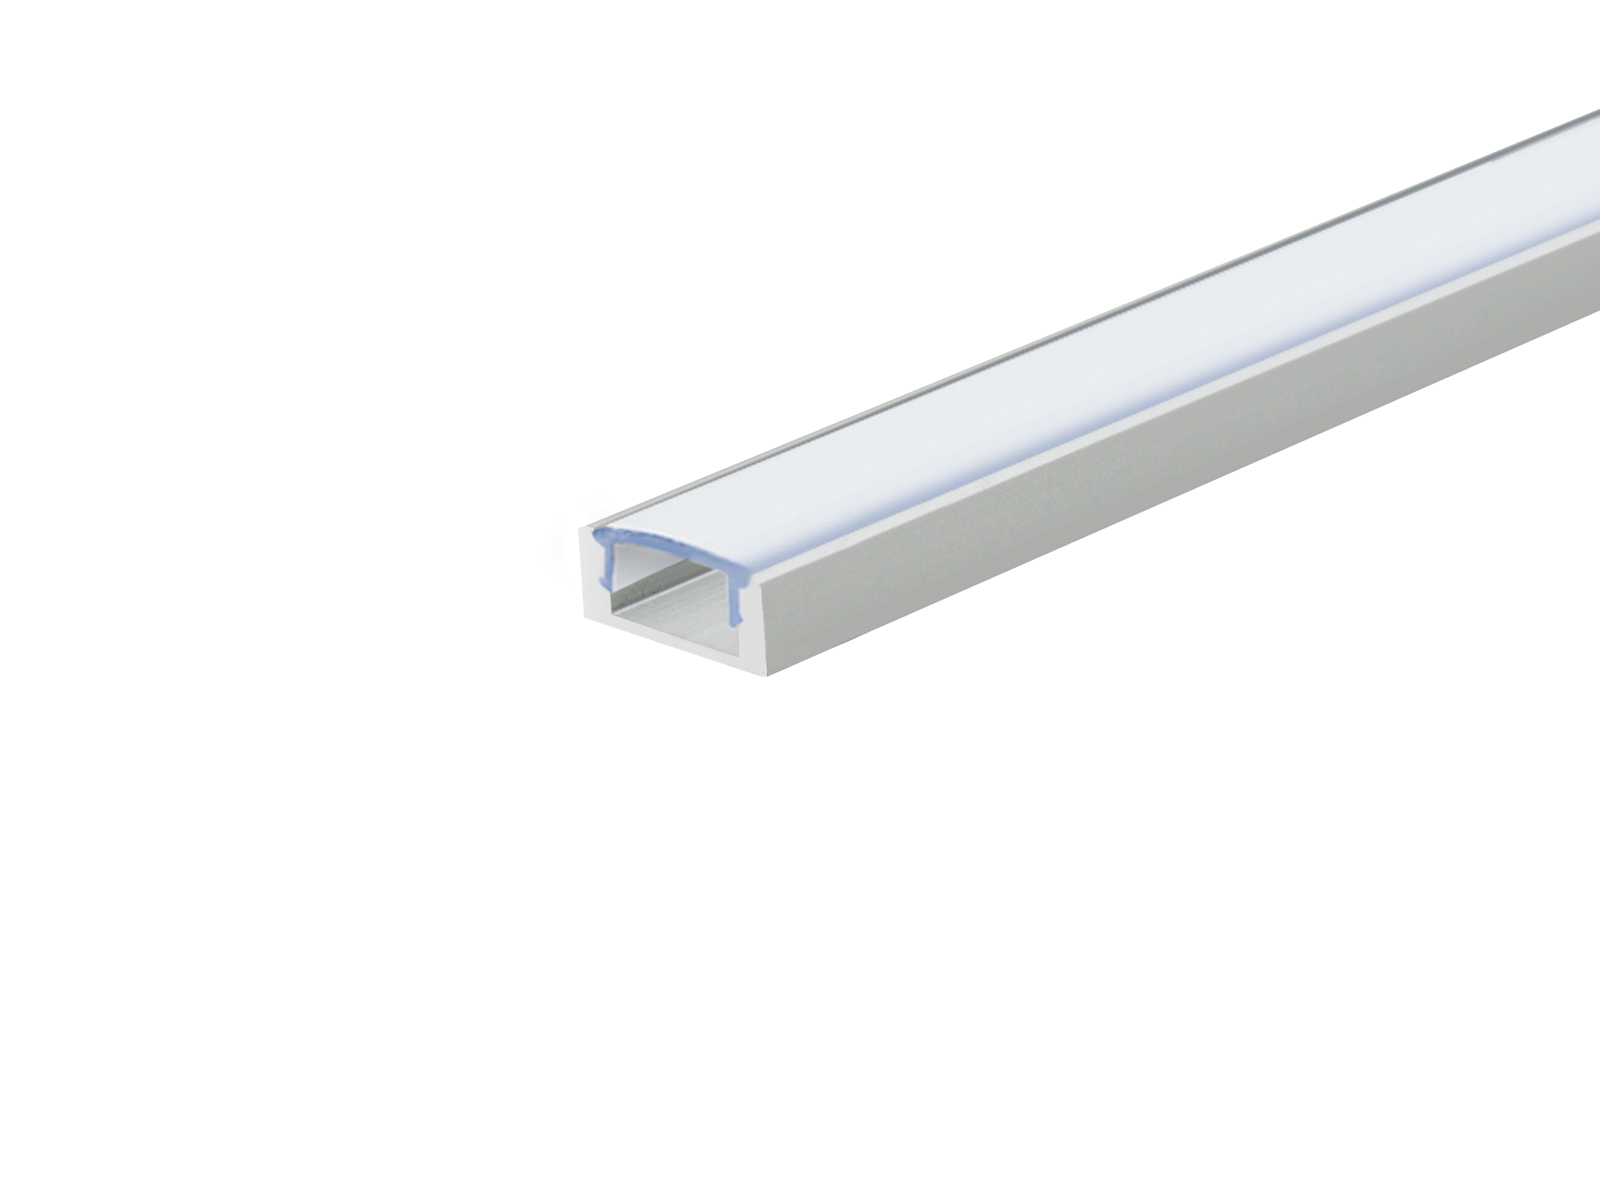 LED Alu U-Profil Slim 7mm silber mit Abdeckung 2m kaufen | PUR-LED